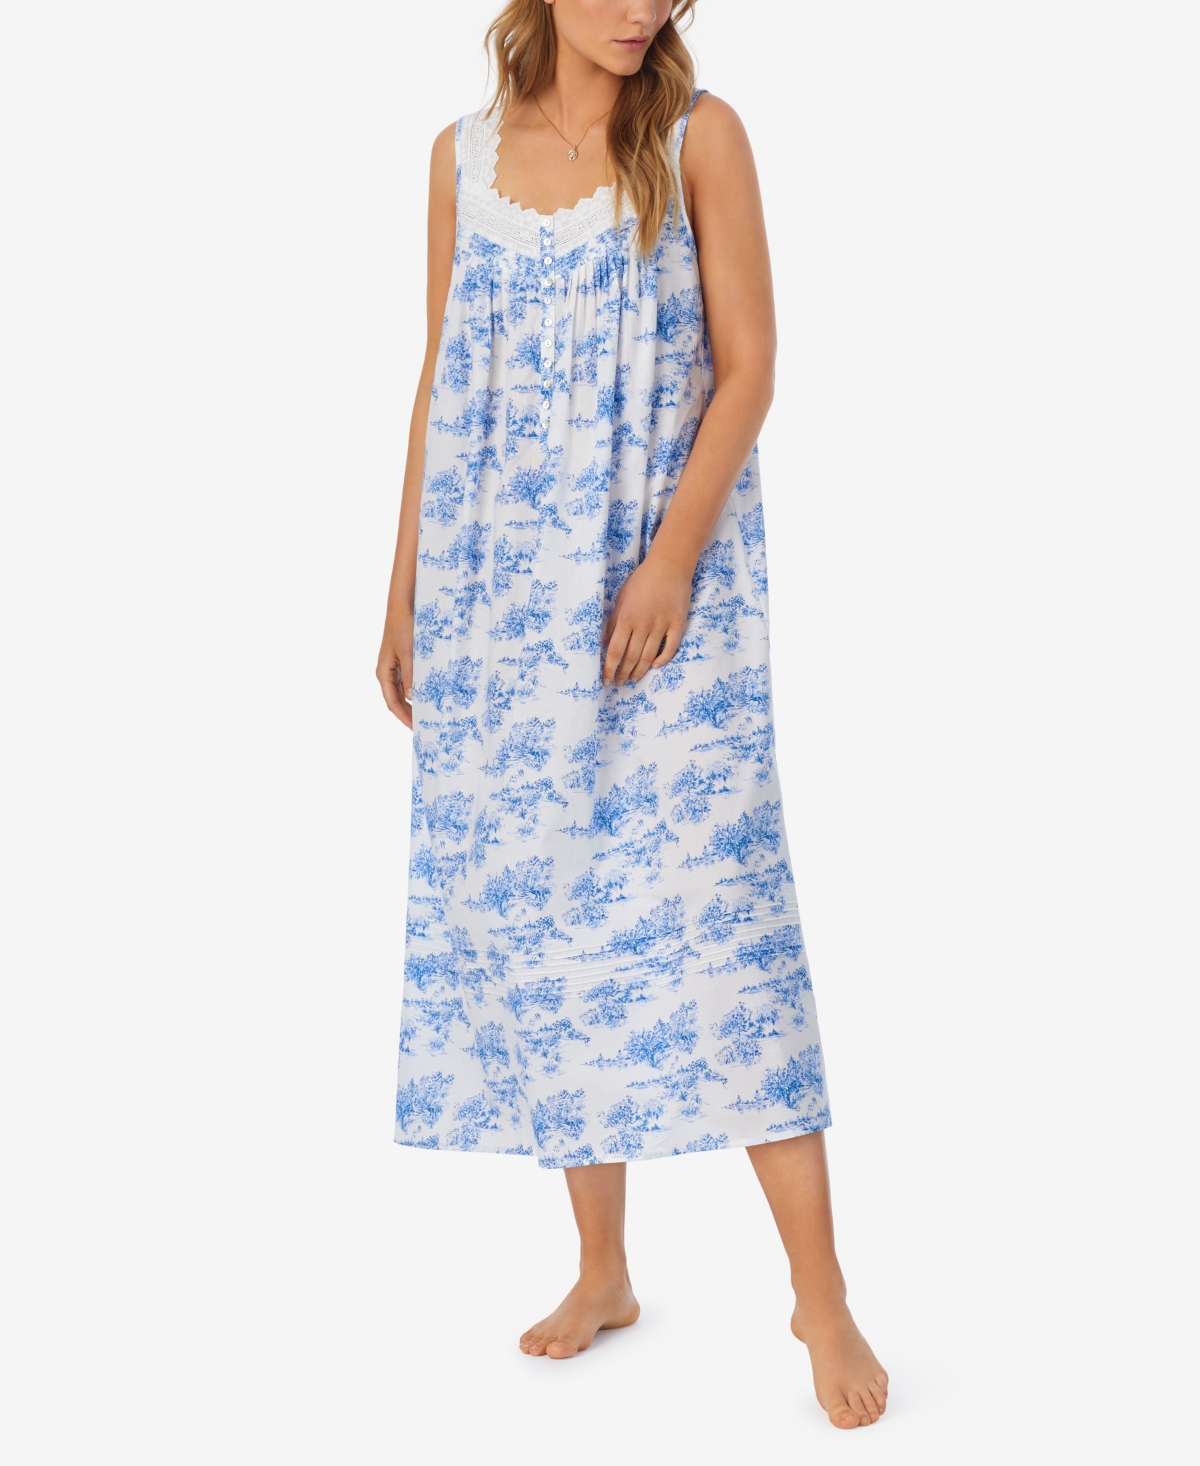 Women's Cotton Lace-Trim Ballet Nightgown - White, Blue Floral Print